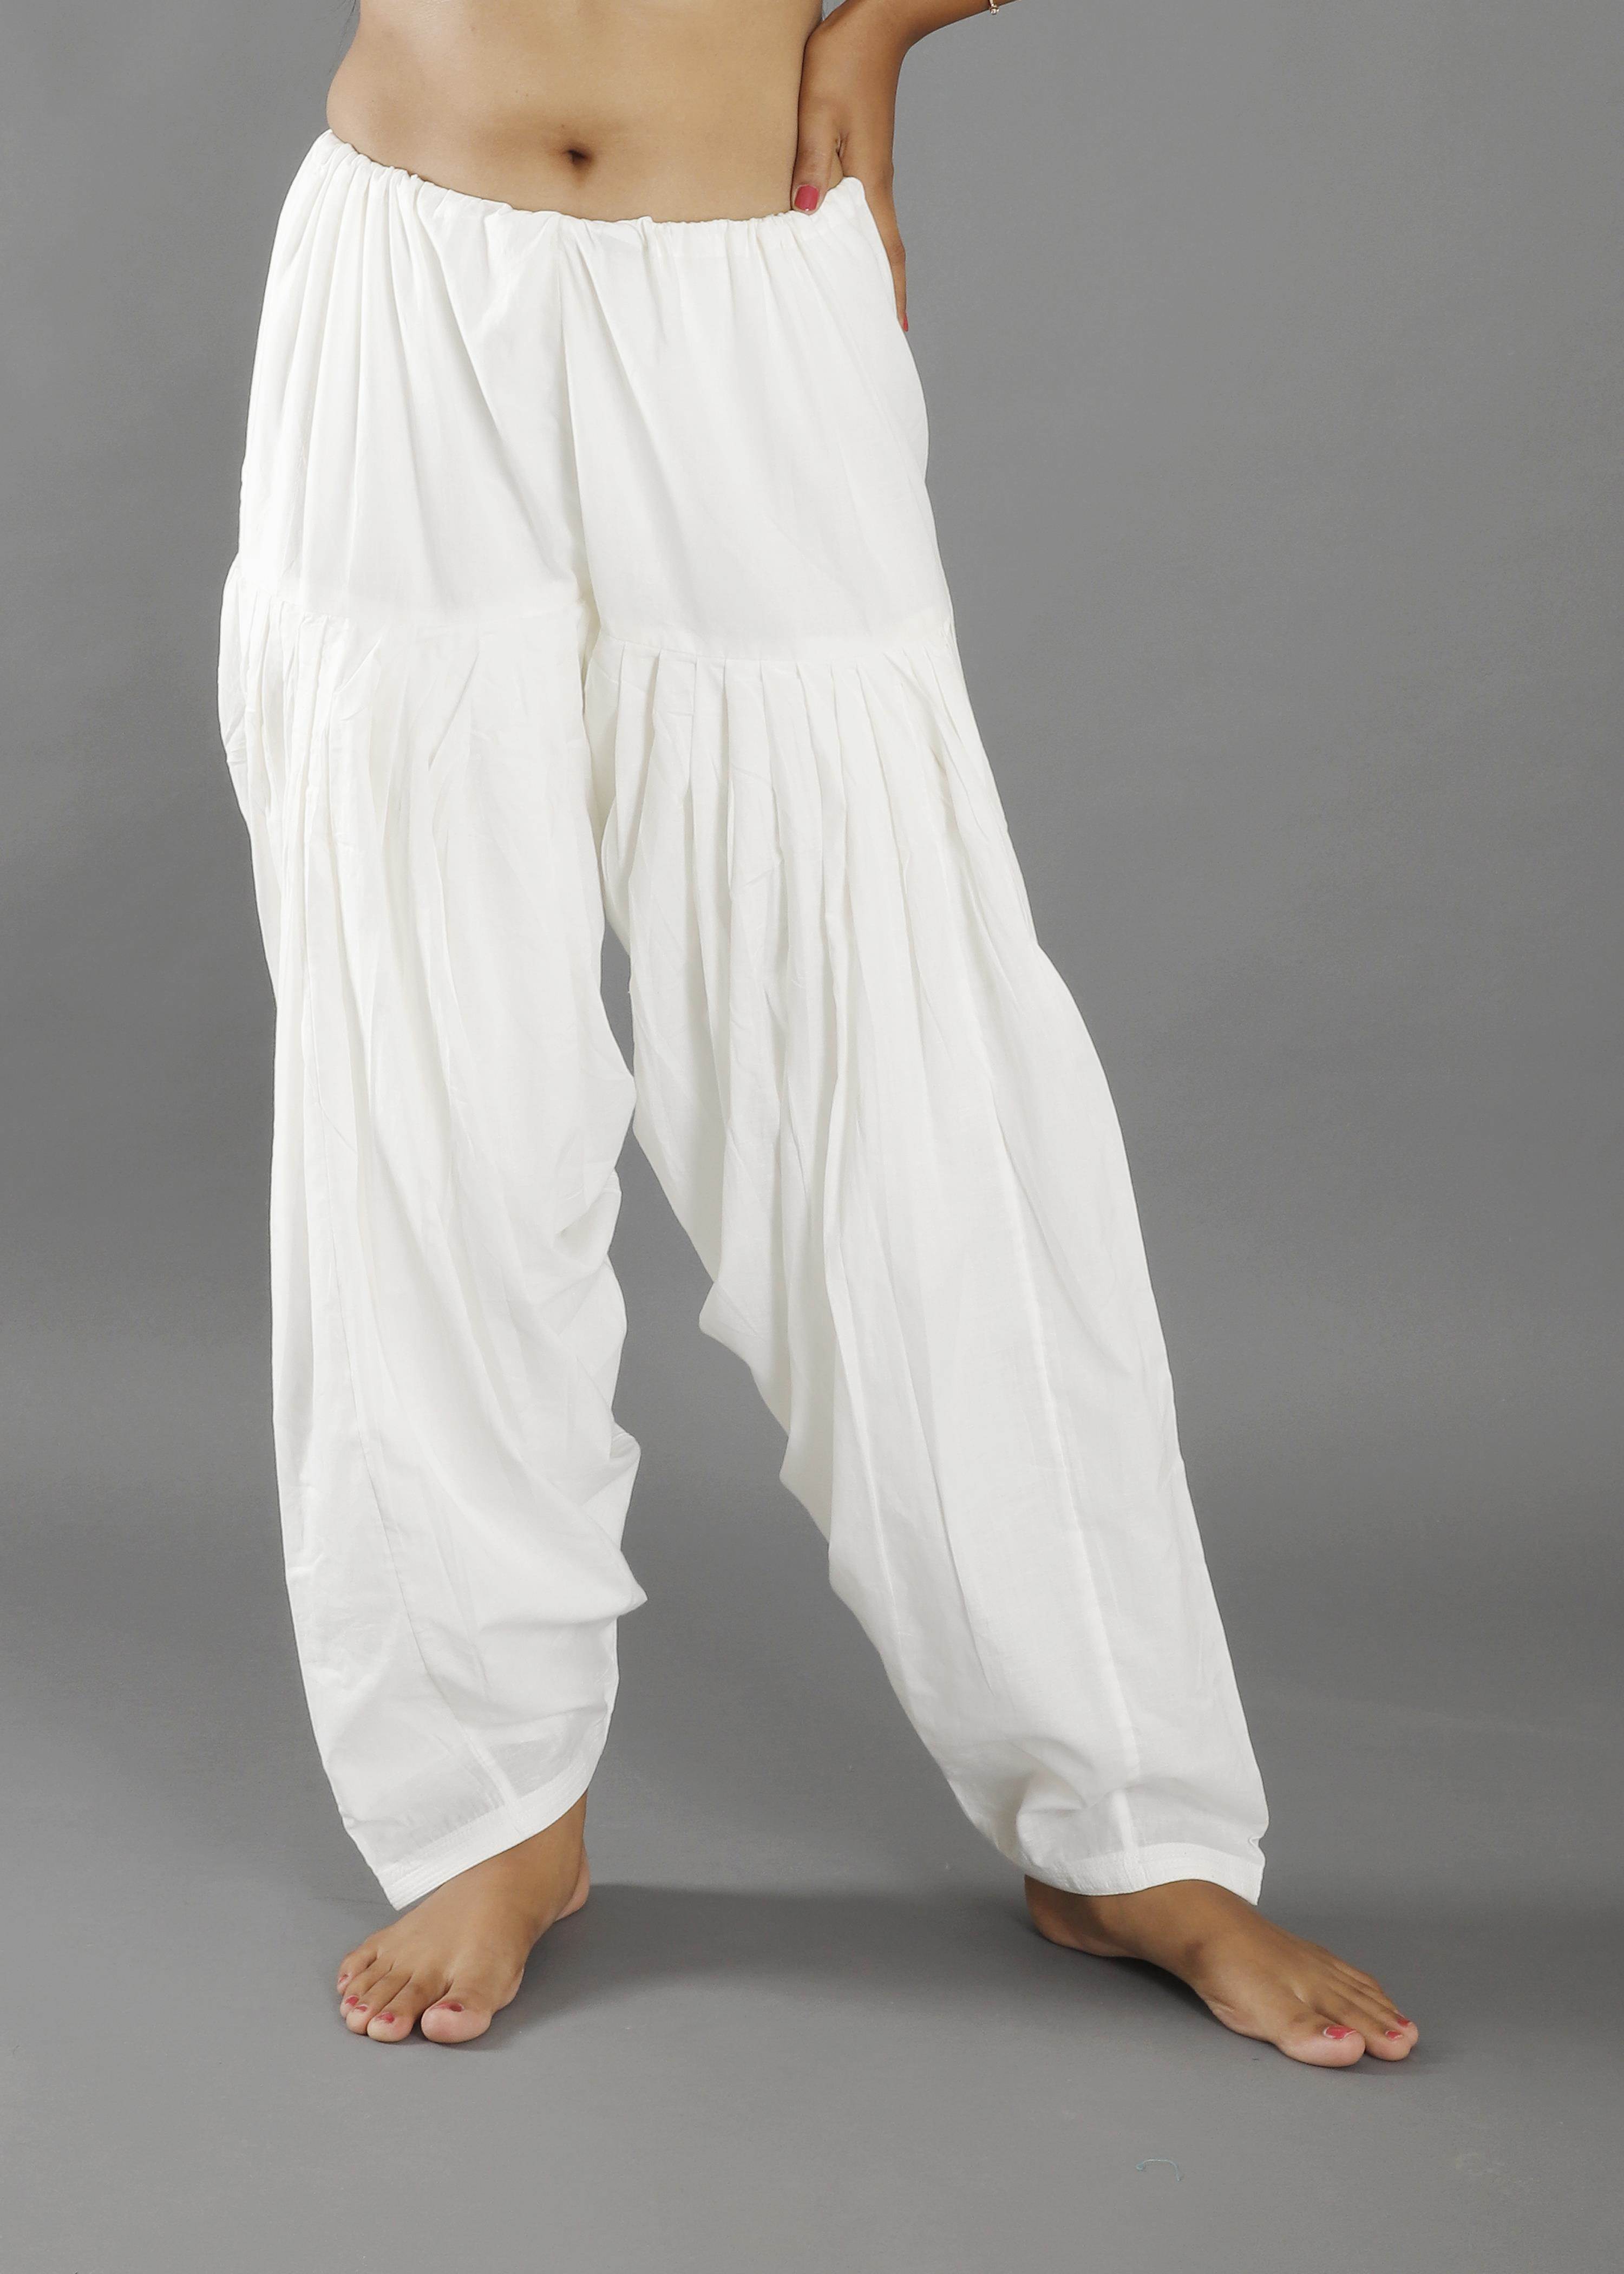 White Banglori Silk Readymade Patiala Suit 273160